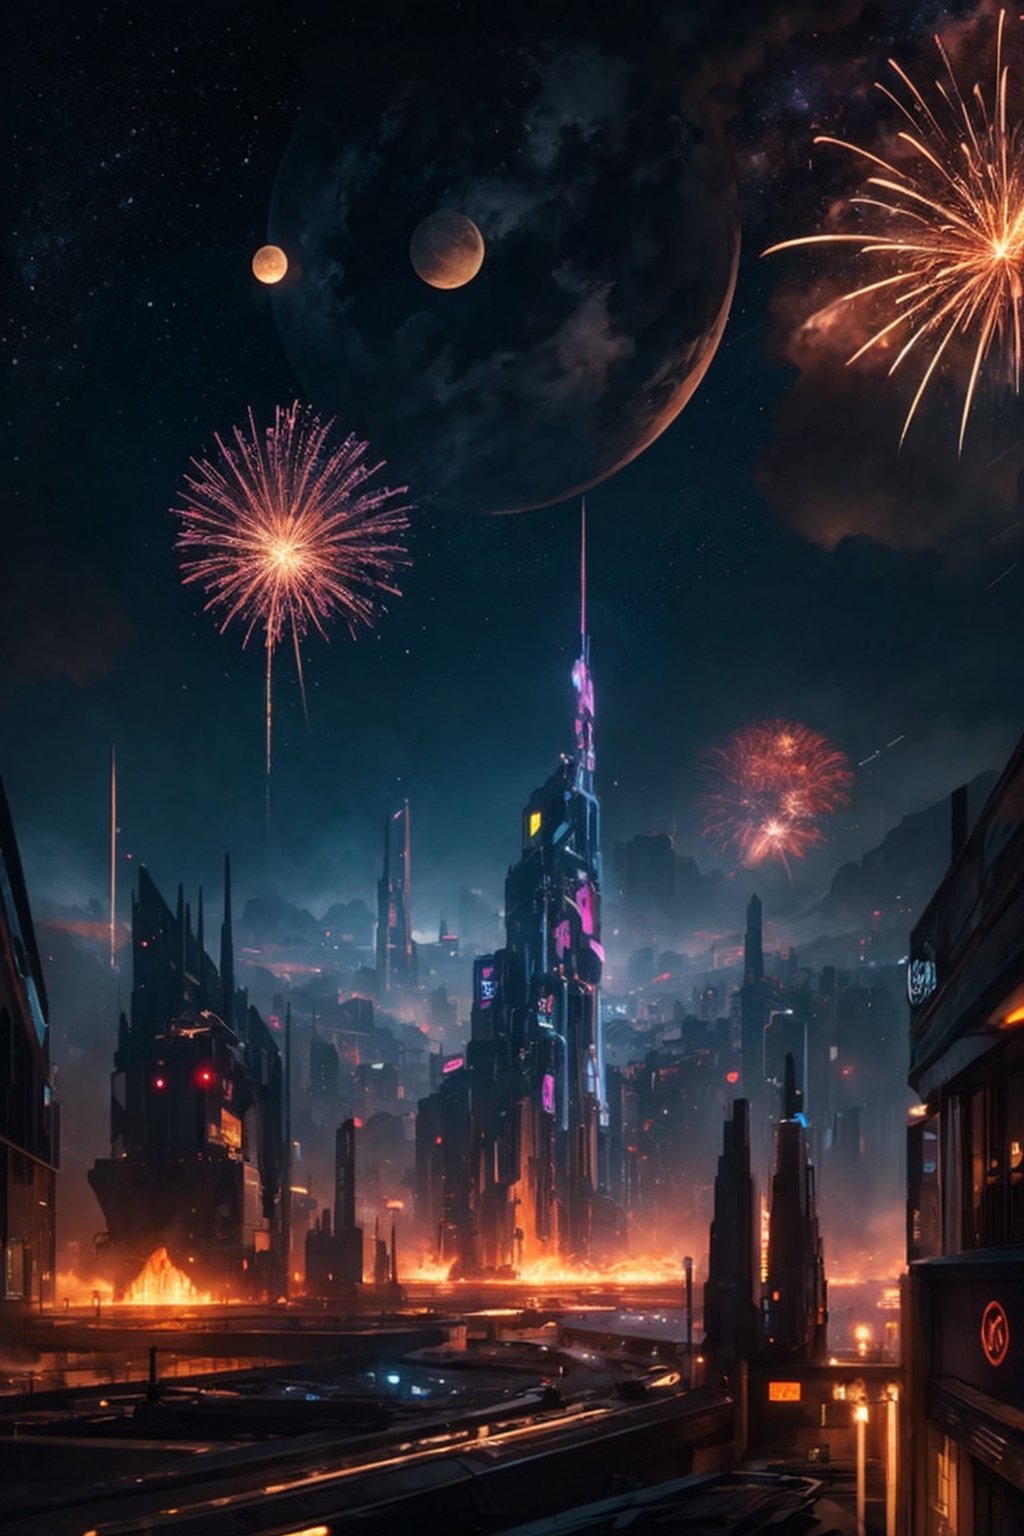 Fire works show in a futuristic city scape, planets, sci-fi, new years celebration, nebulae, galaxy, space port, futureistic cyber punk scene